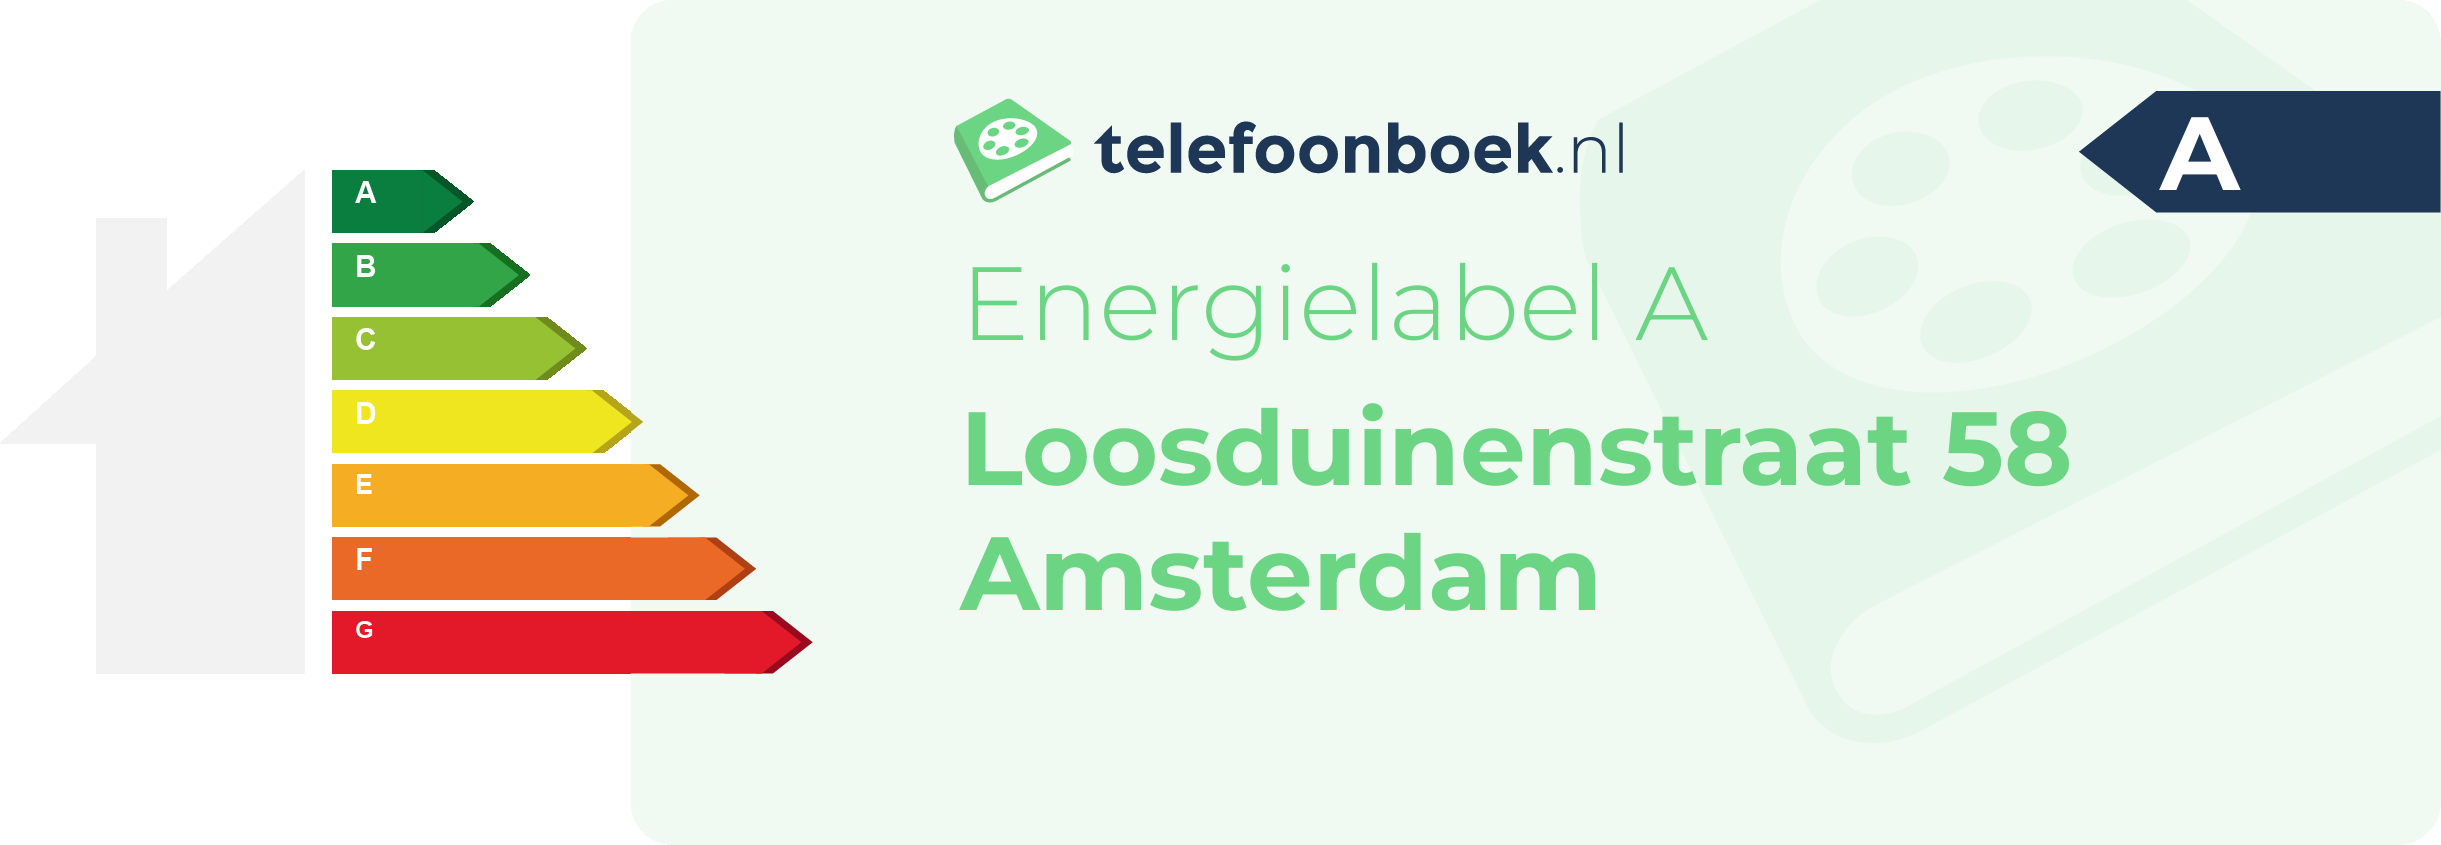 Energielabel Loosduinenstraat 58 Amsterdam